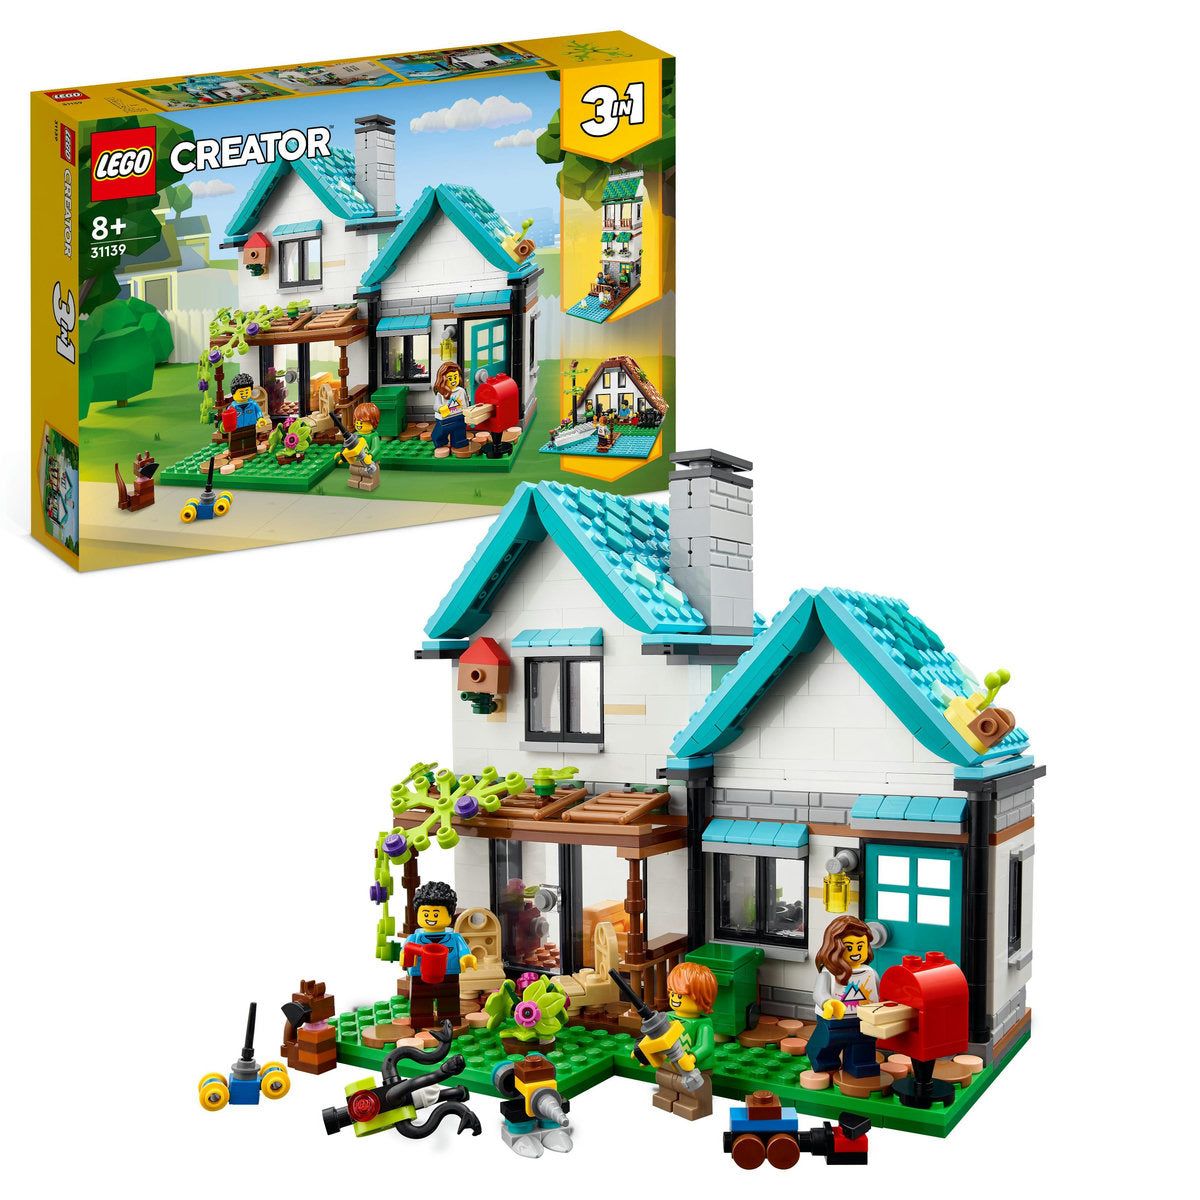 CASA PRIMITOARE - LEGO CREATOR - LEGO (31139)